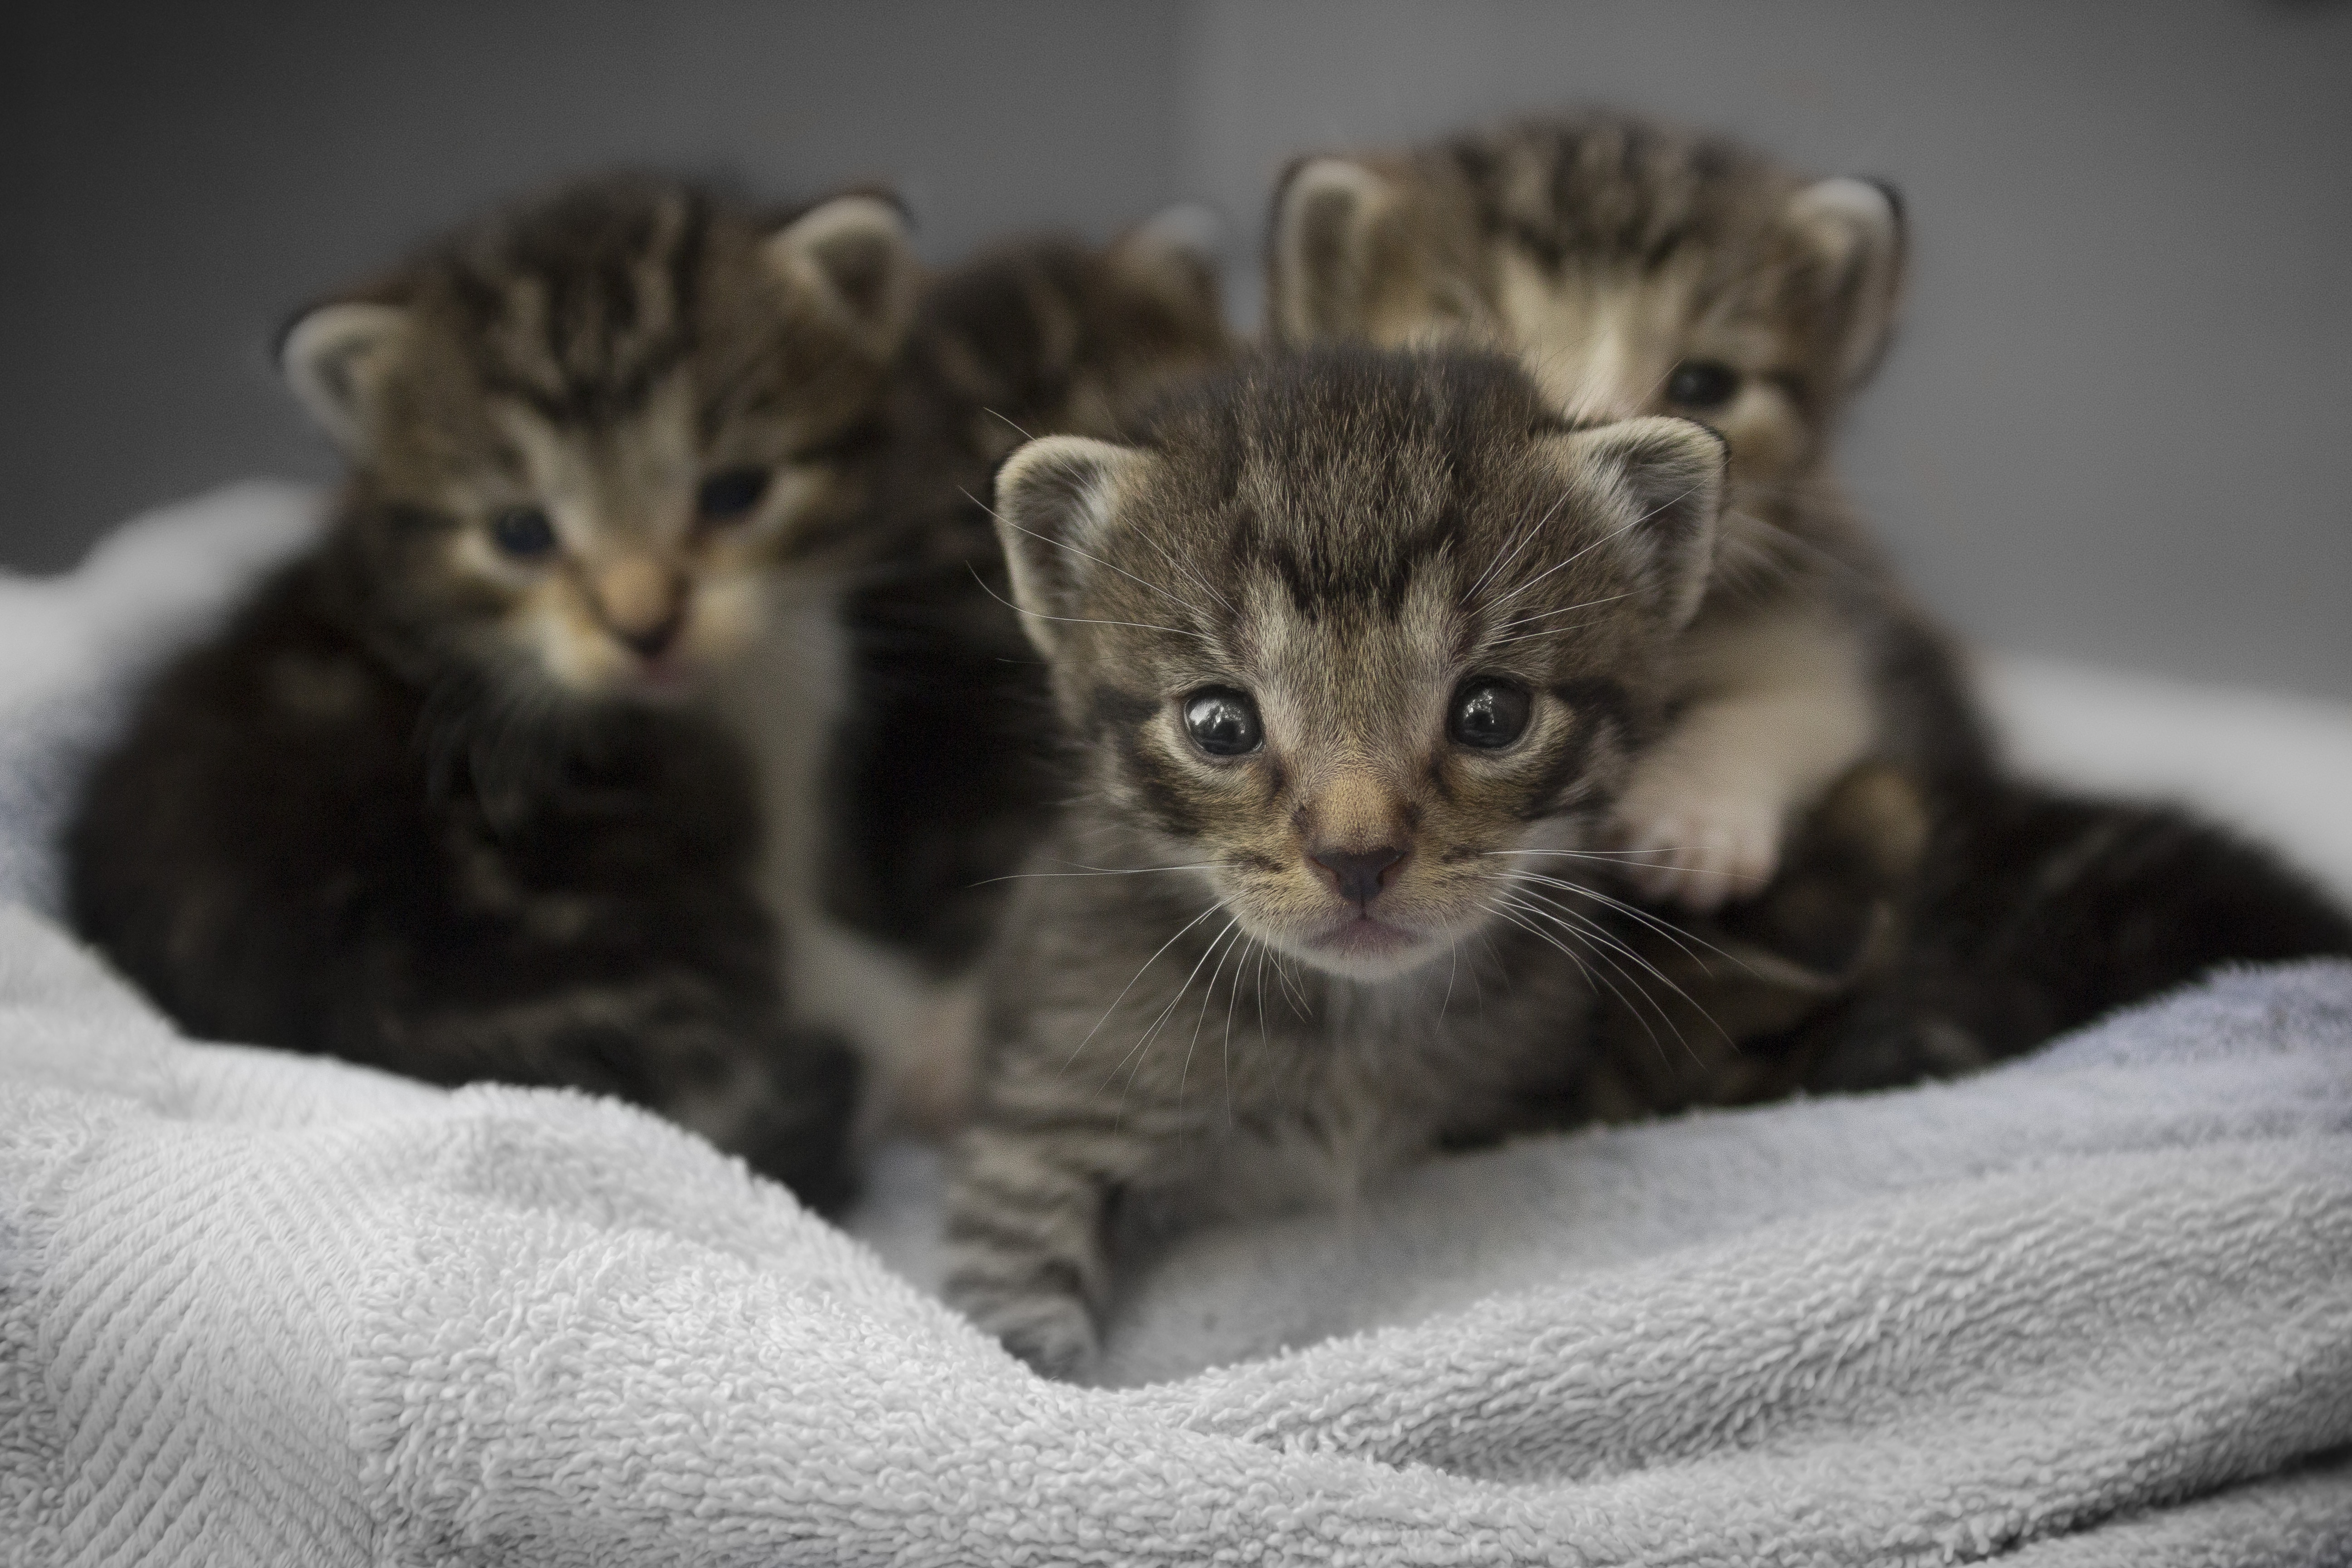 kittens on gray towel